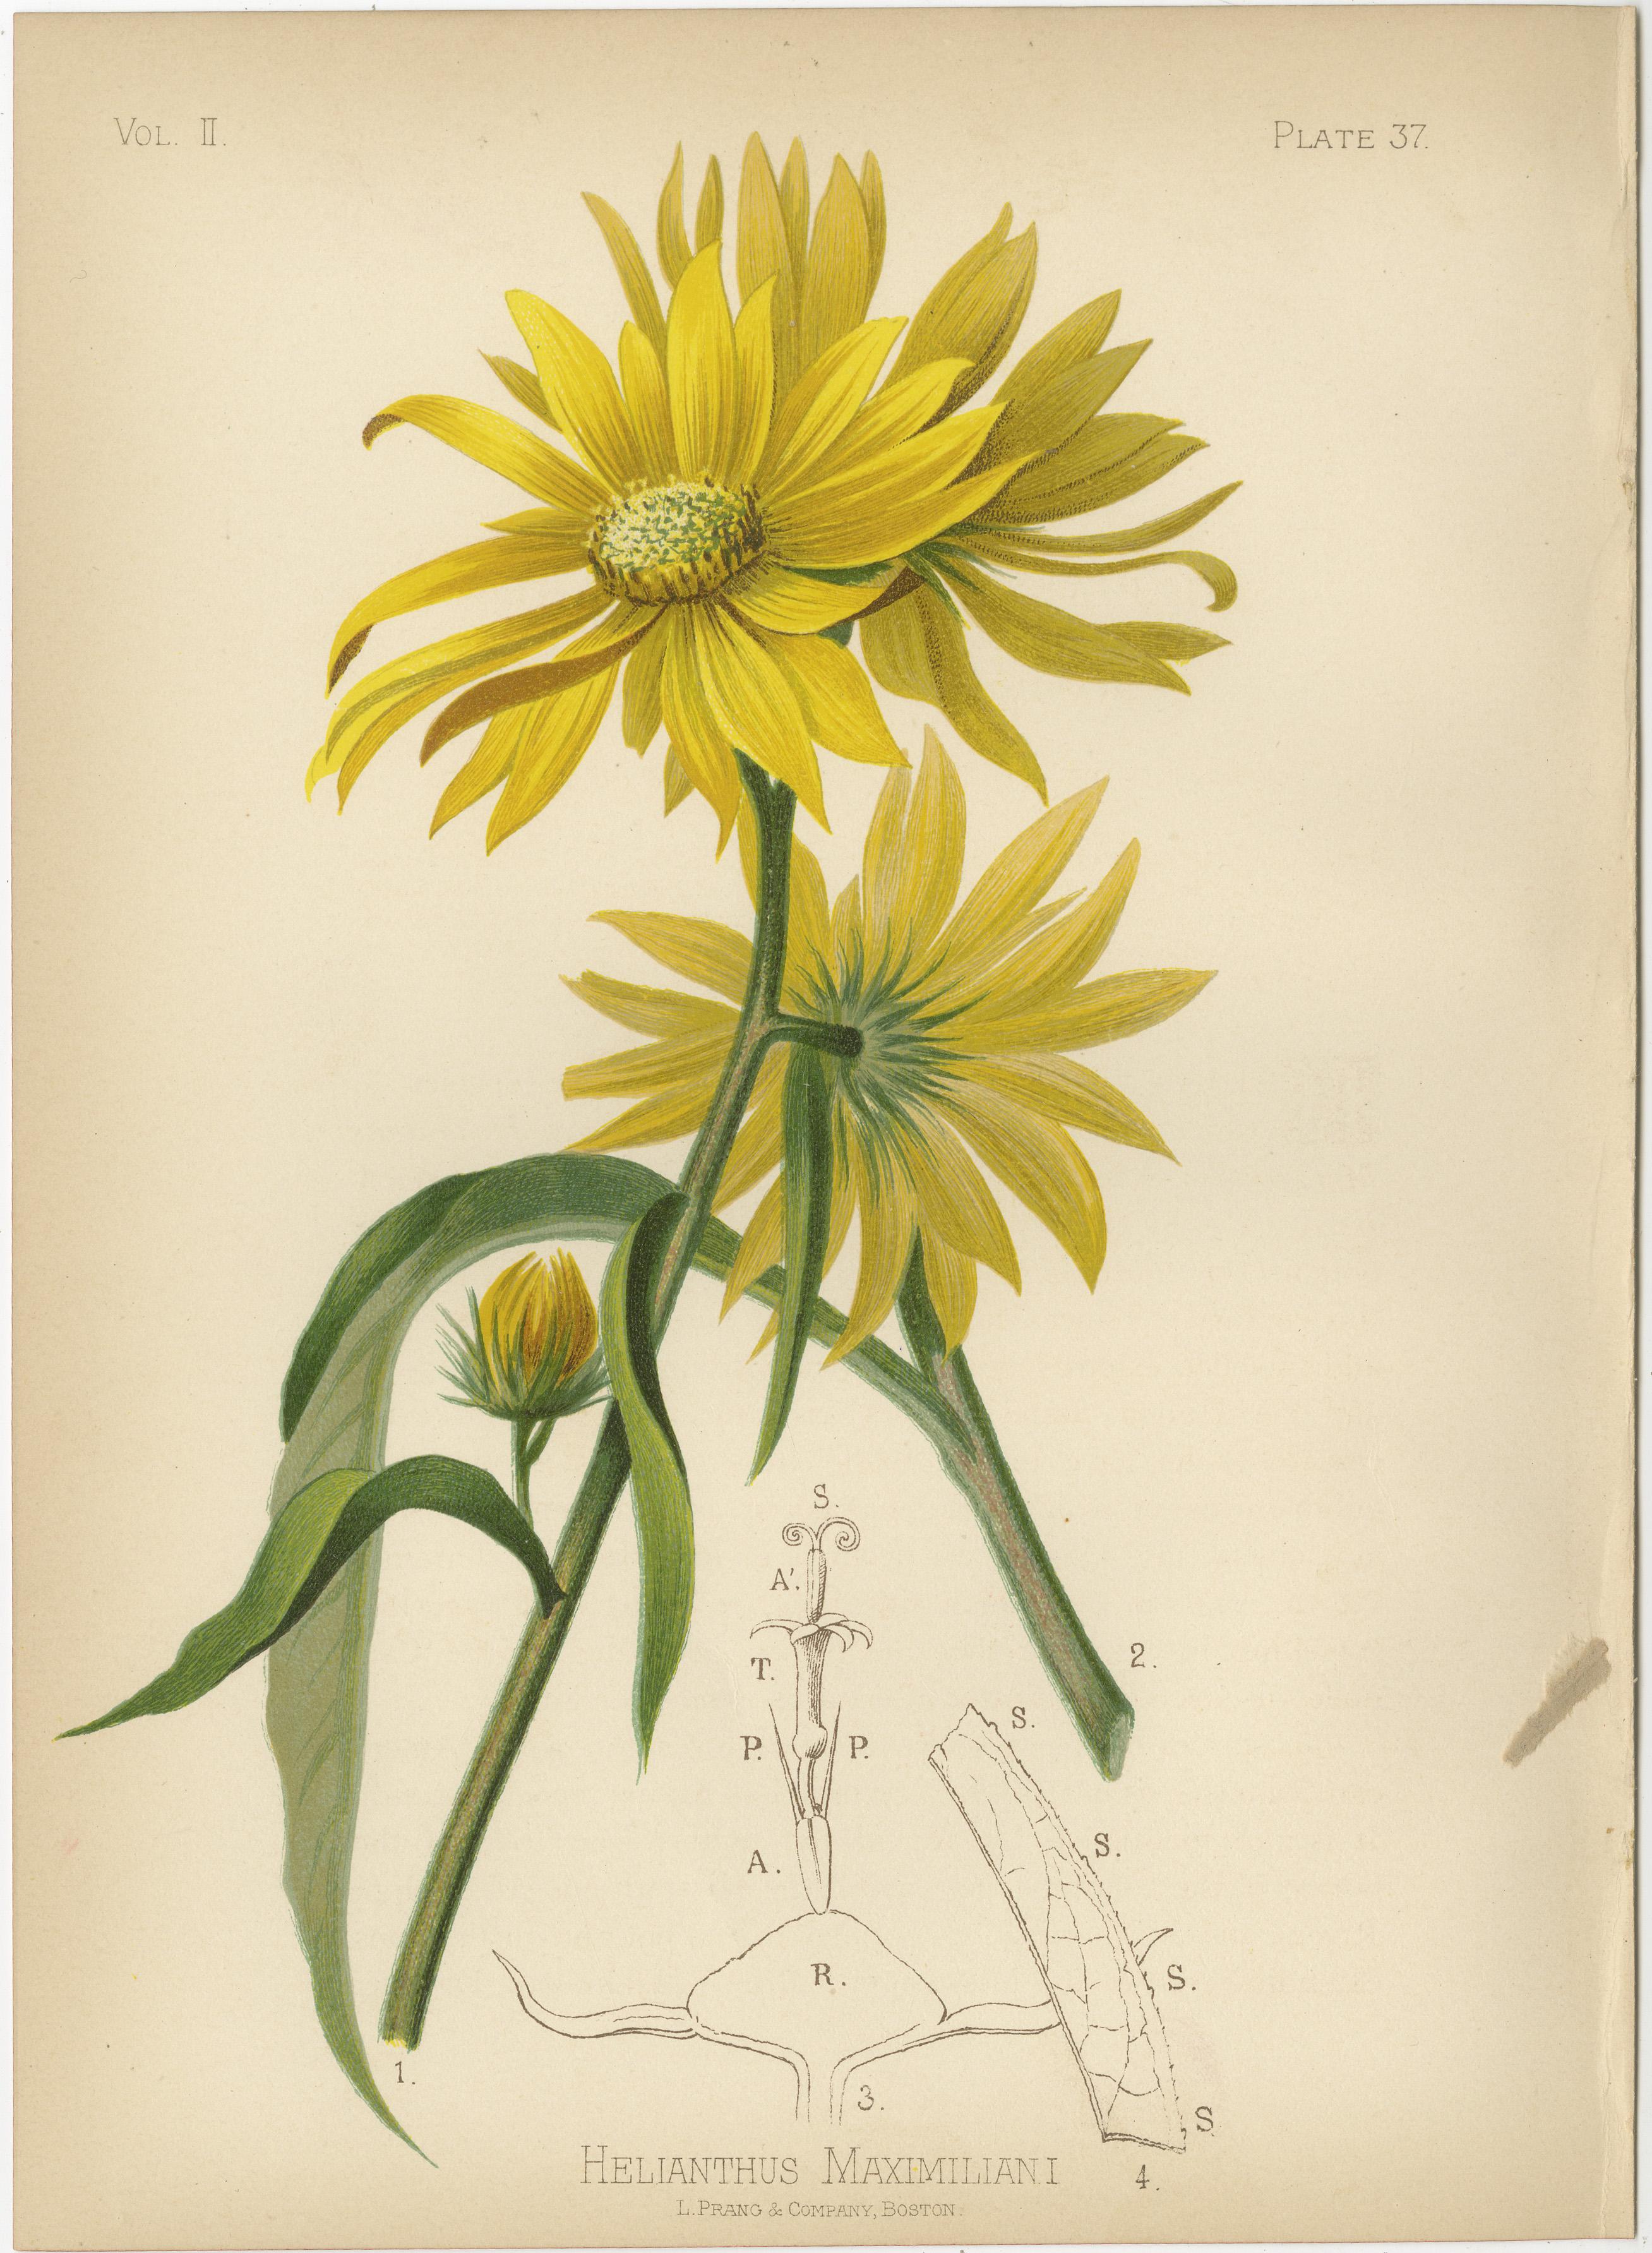 Late 19th Century Botanical Elegance: A Chromolithographic Tribute, 1879